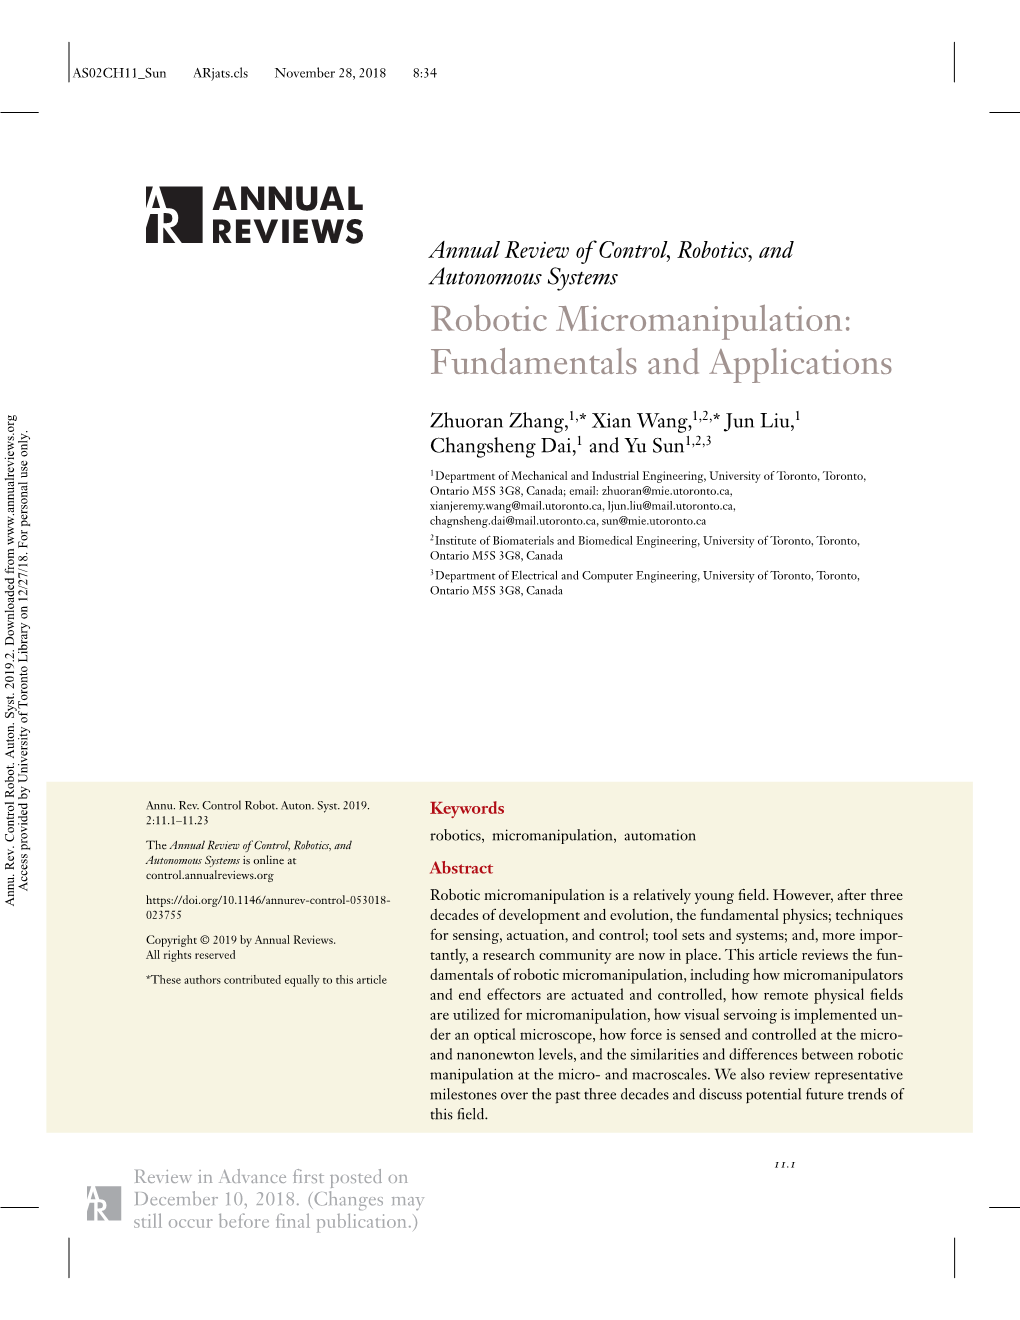 Robotic Micromanipulation: Fundamentals and Applications